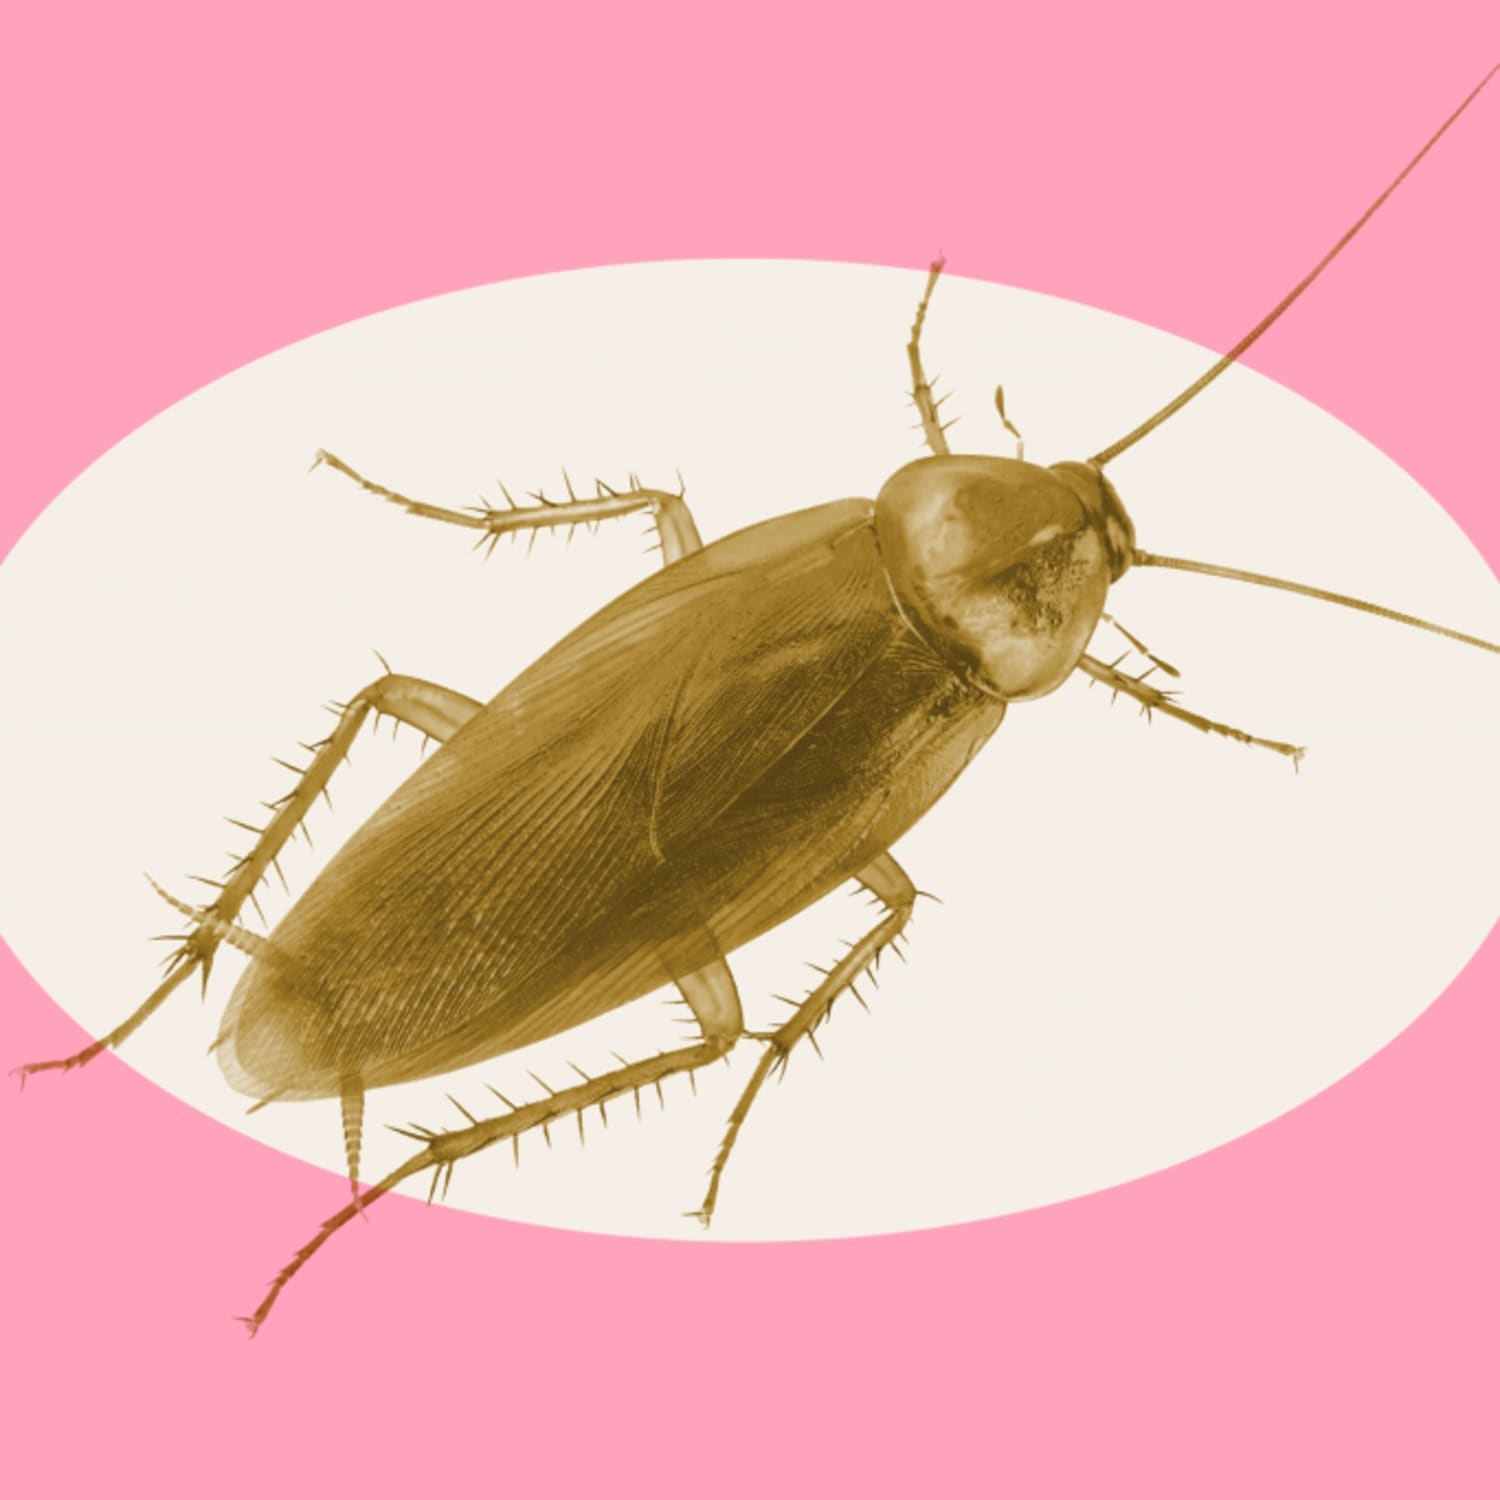 Diatomaceous Earth: The Natural Cockroach Killer